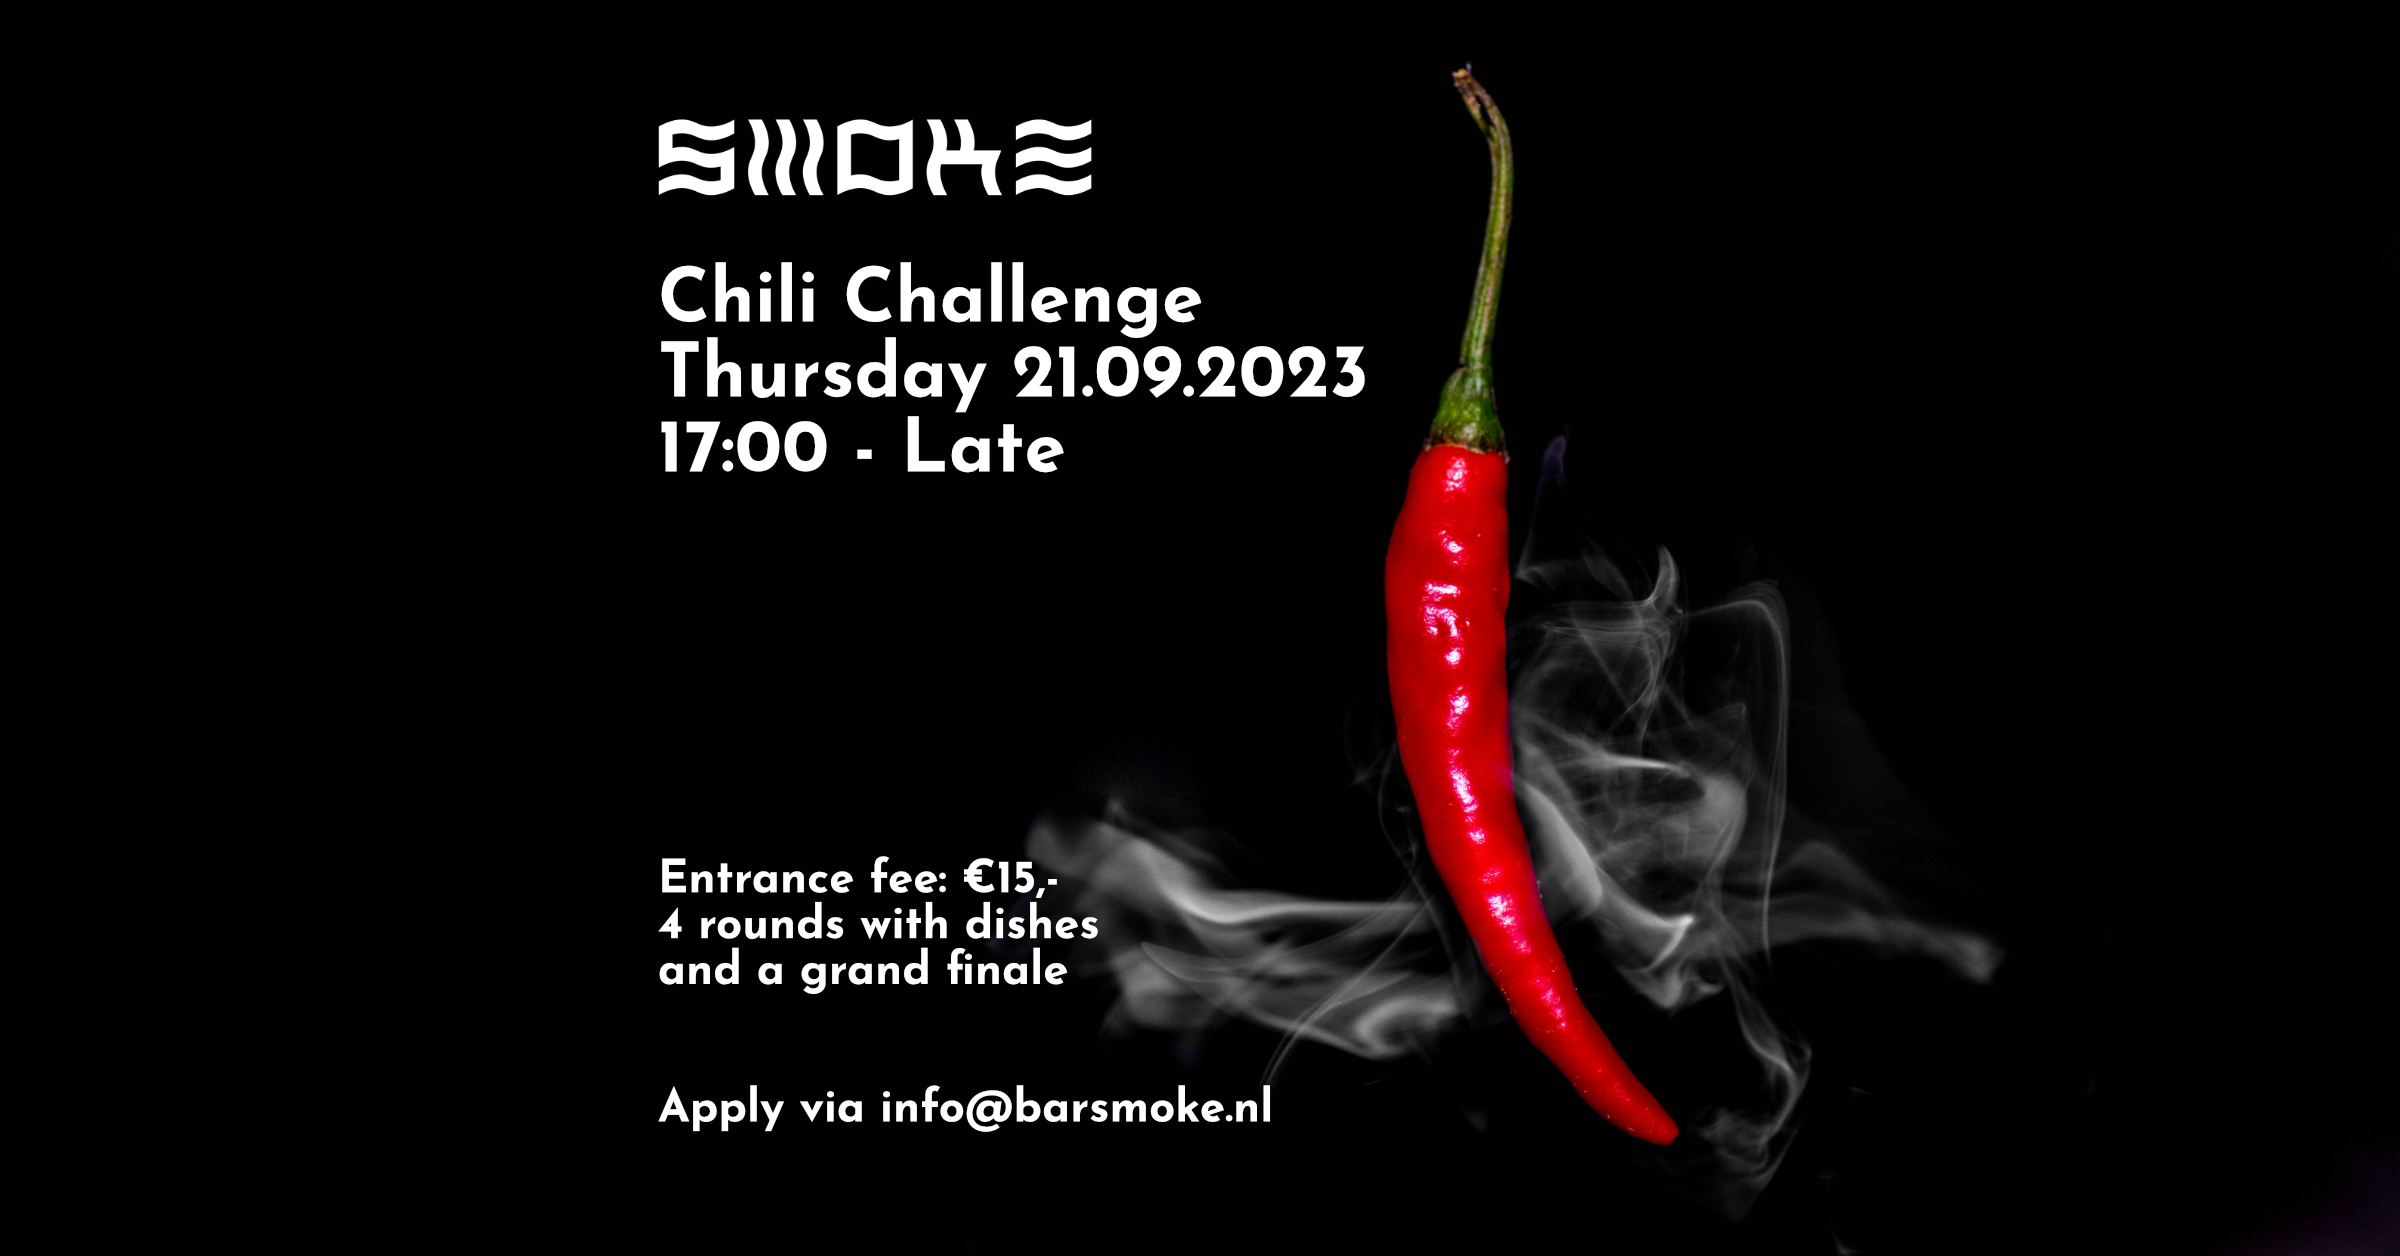 Smoke’s Chili Challenge 2023 – APPLY VIA MAIL ONLY